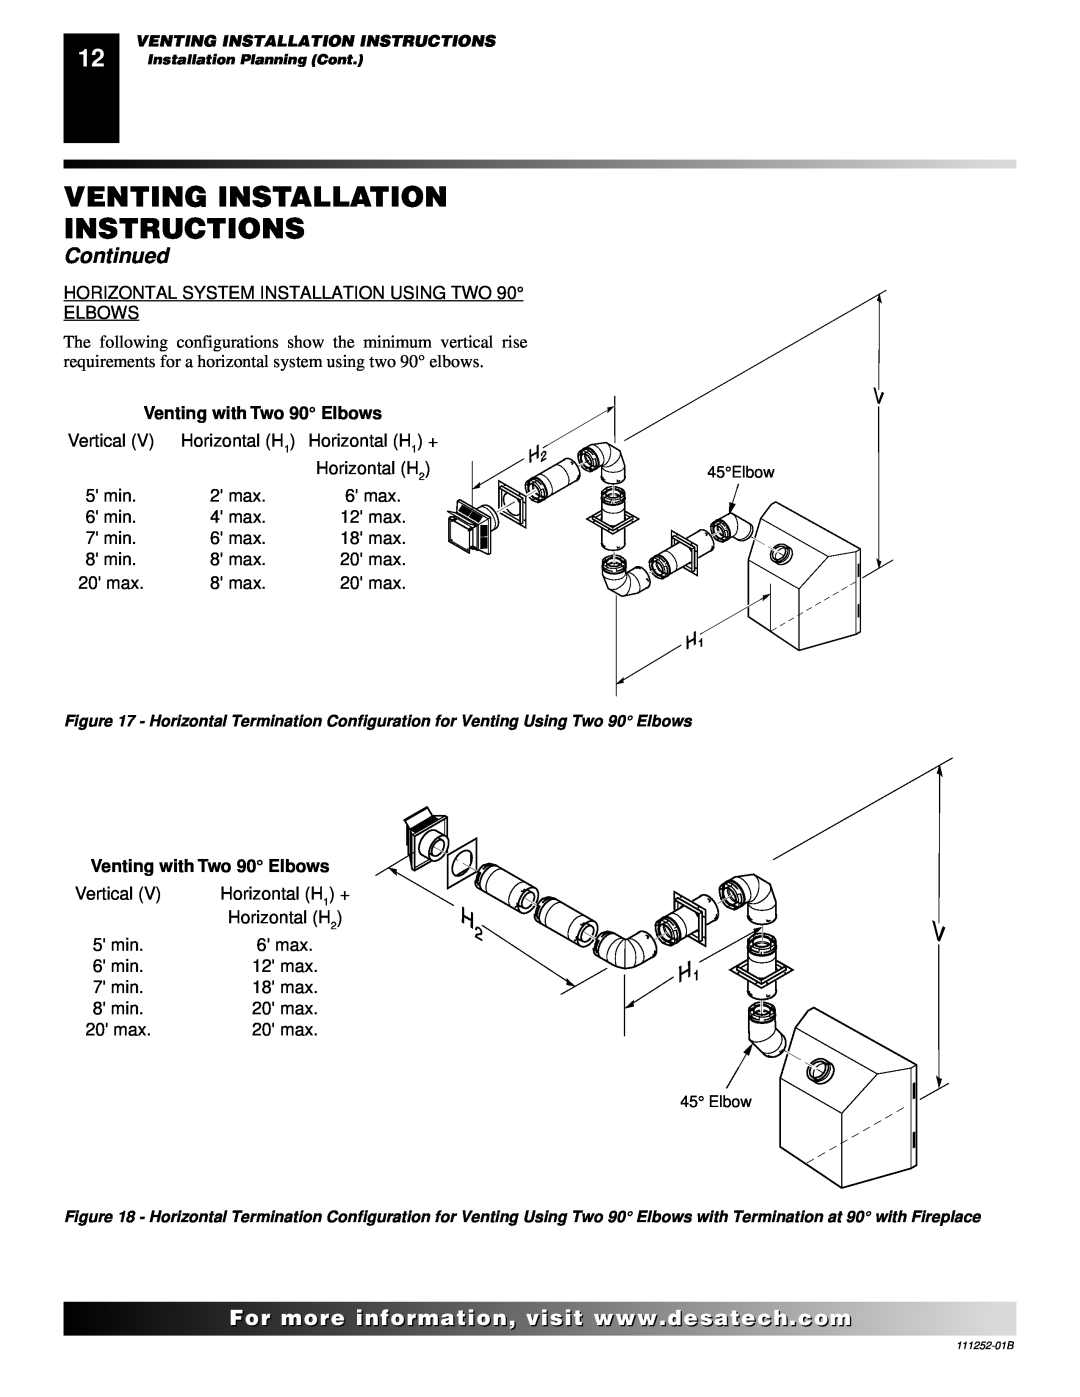 Desa (V)V36PA(1), CHDV36NRA, V36NA, V36PA Venting Installation Instructions, Continued, Venting with Two 90 Elbows 